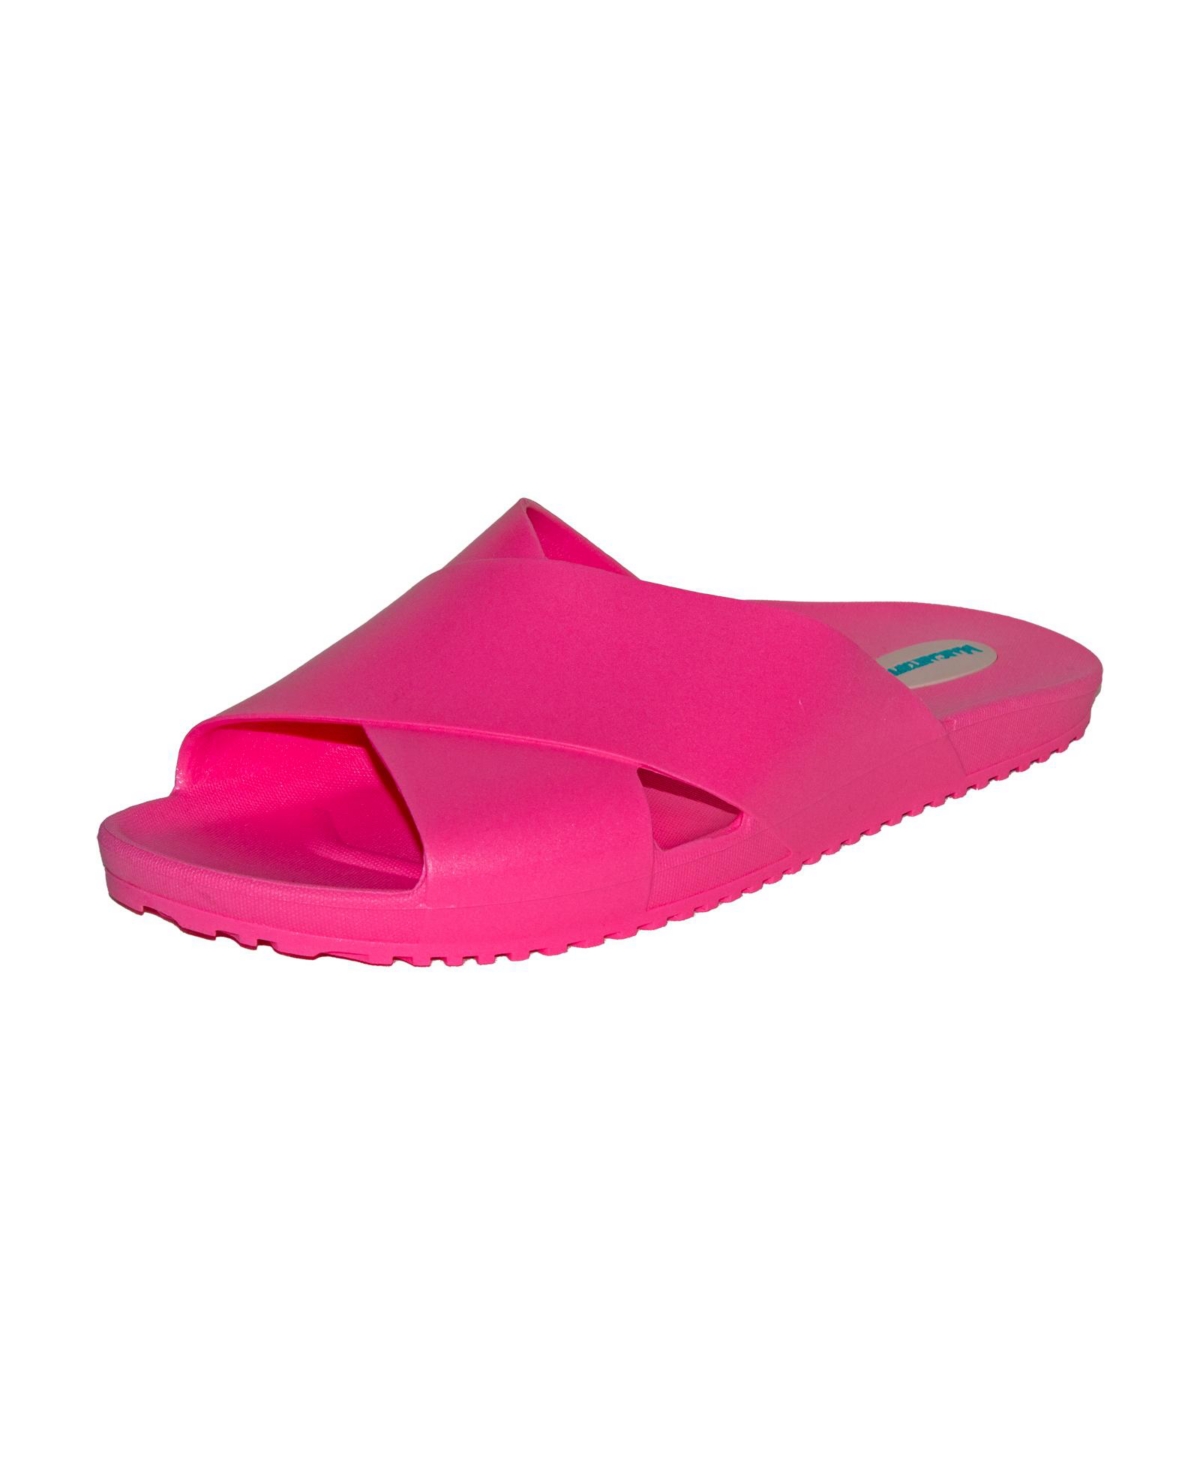 Women's Sandals Maxwell Flip Flop - Coral